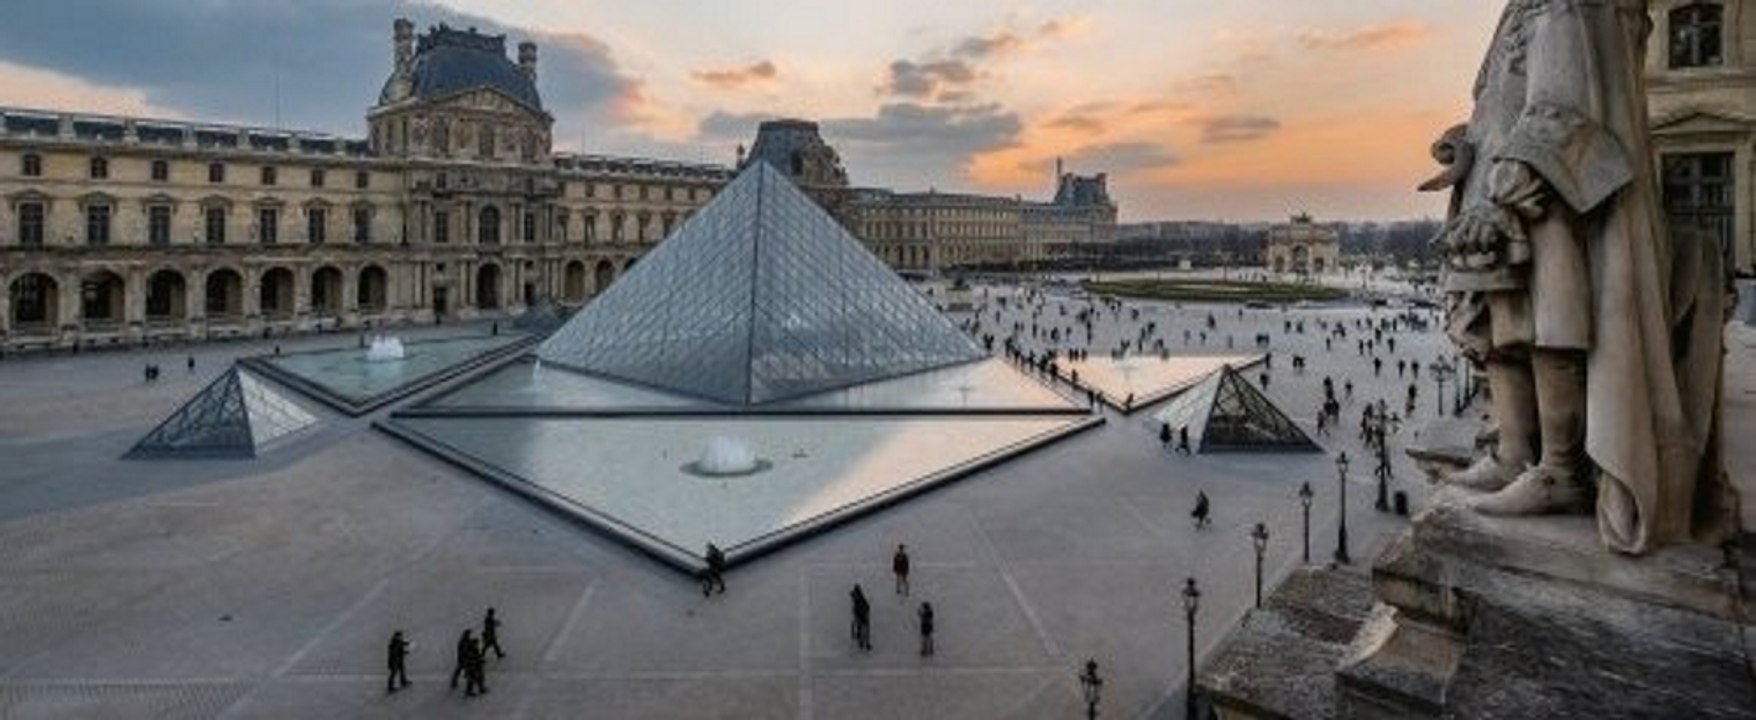 Eine Nacht im Louvre Leonardo da Vinci Film